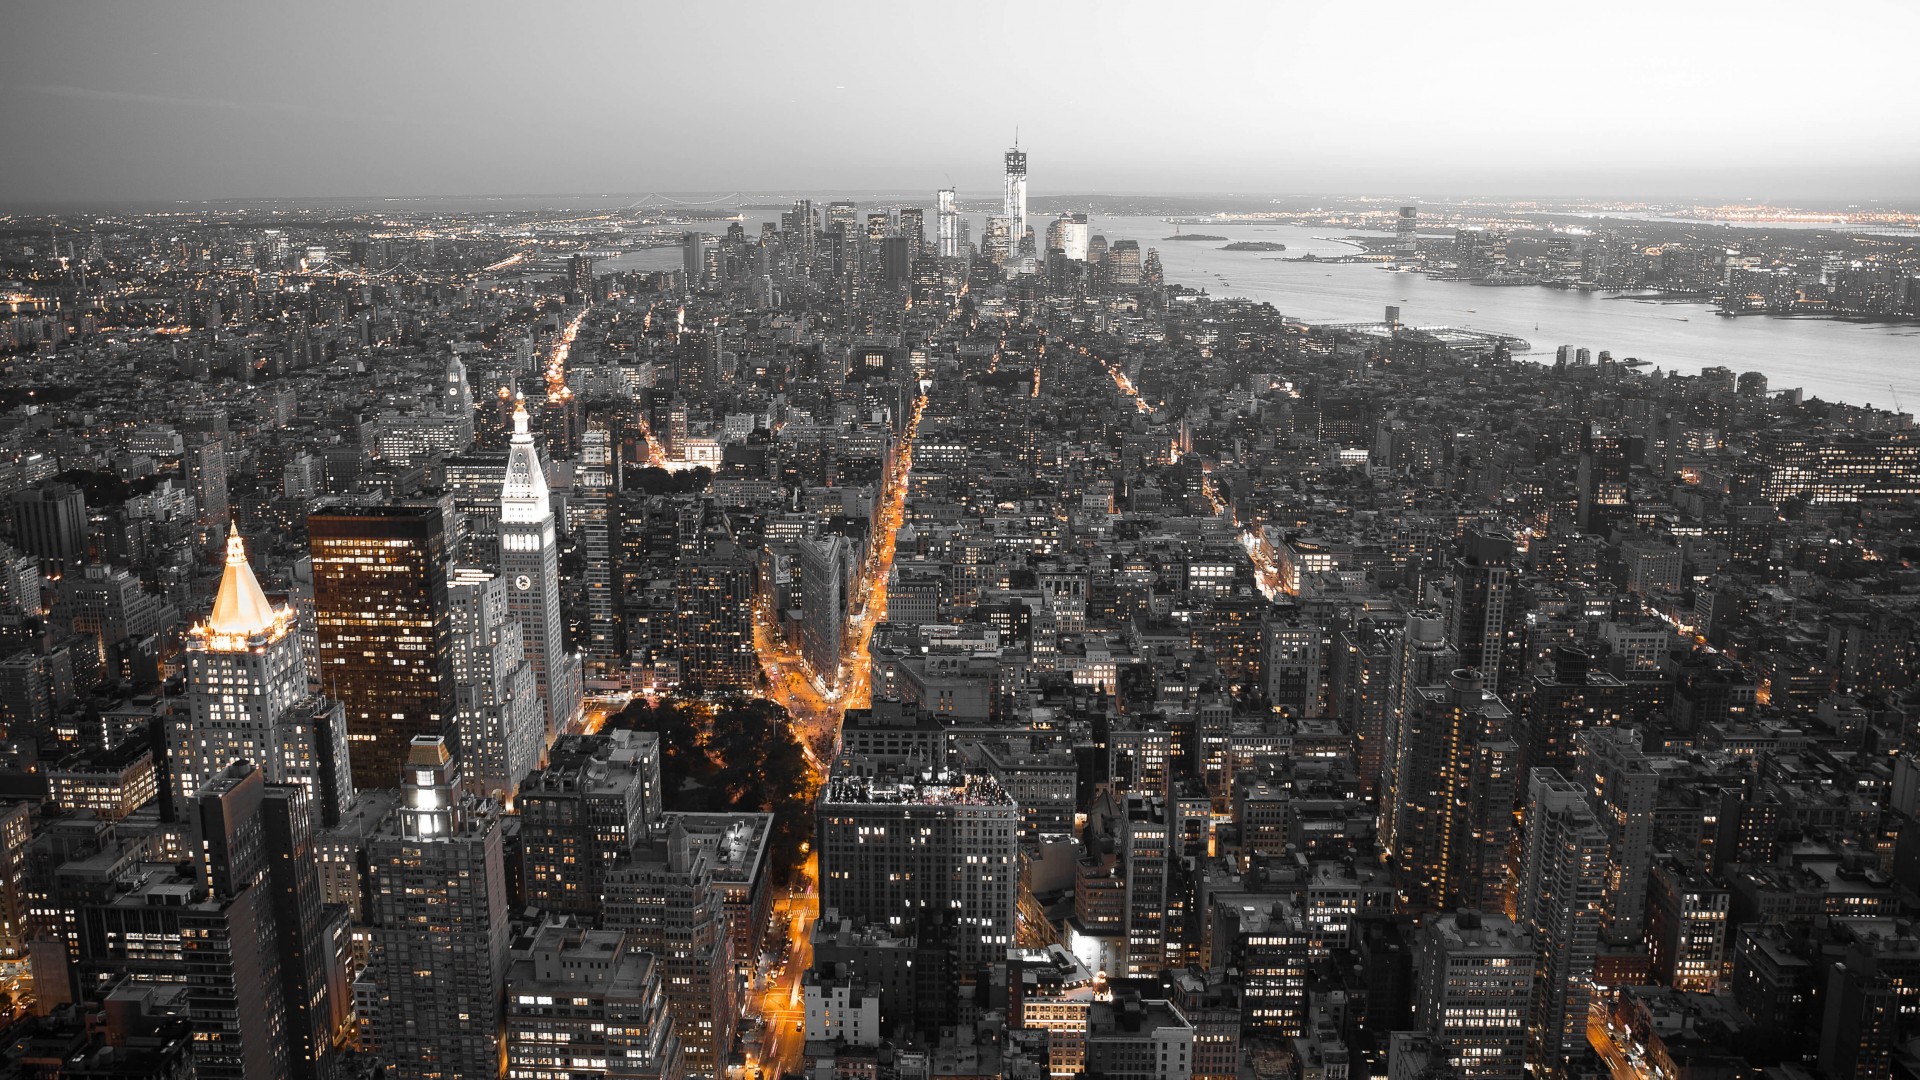 New York City by Night Wallpaper for Desktop 1920x1080